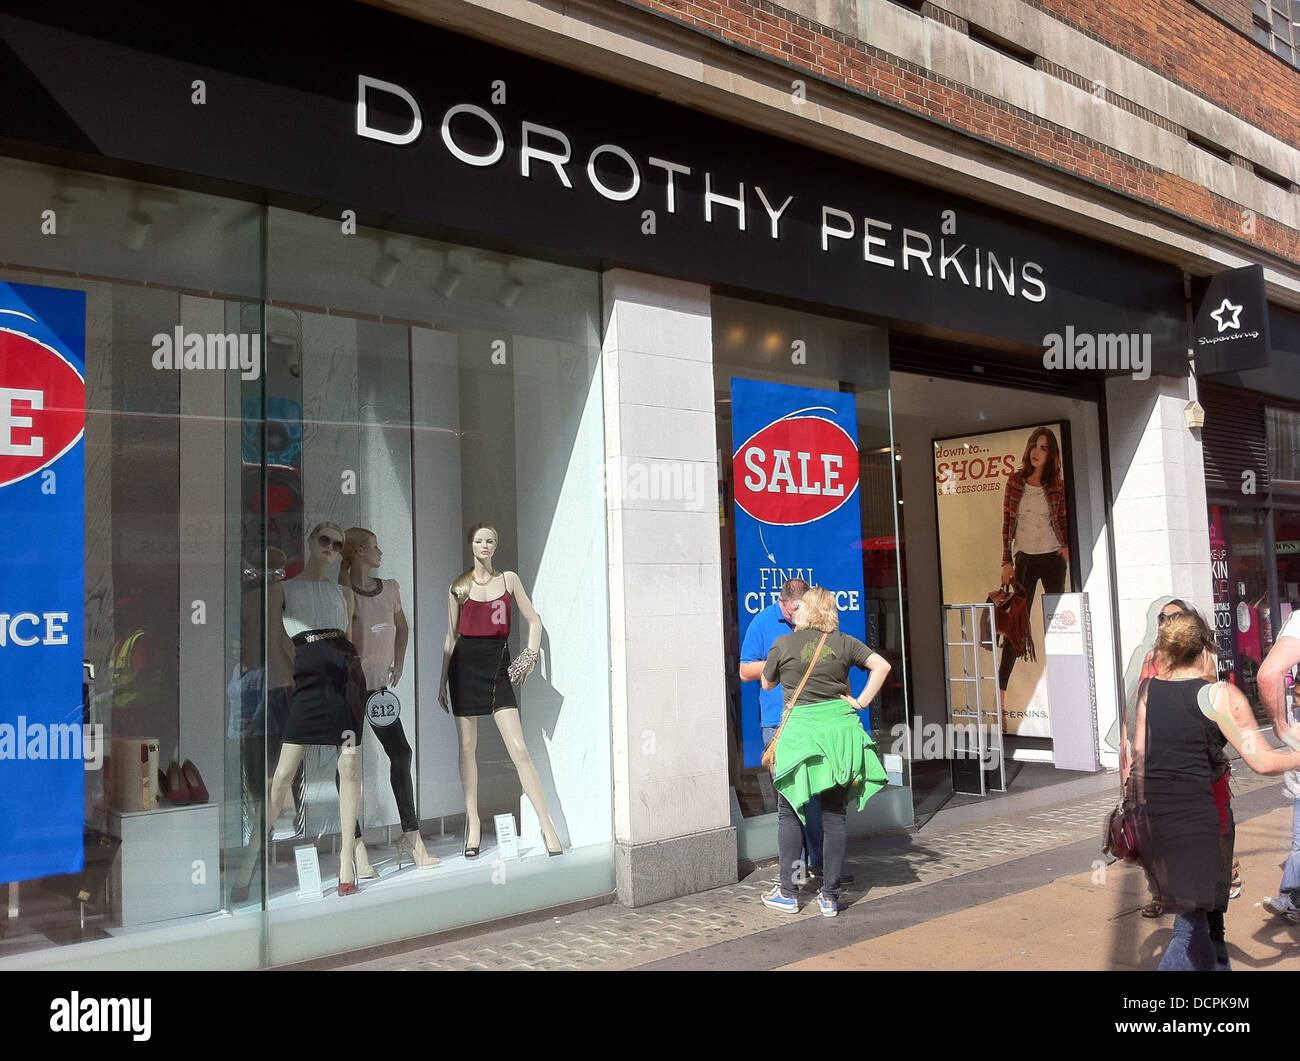 DOROTHY PERKINS store on Oxford Street, London. Photo Tony Gale Stock Photo  - Alamy